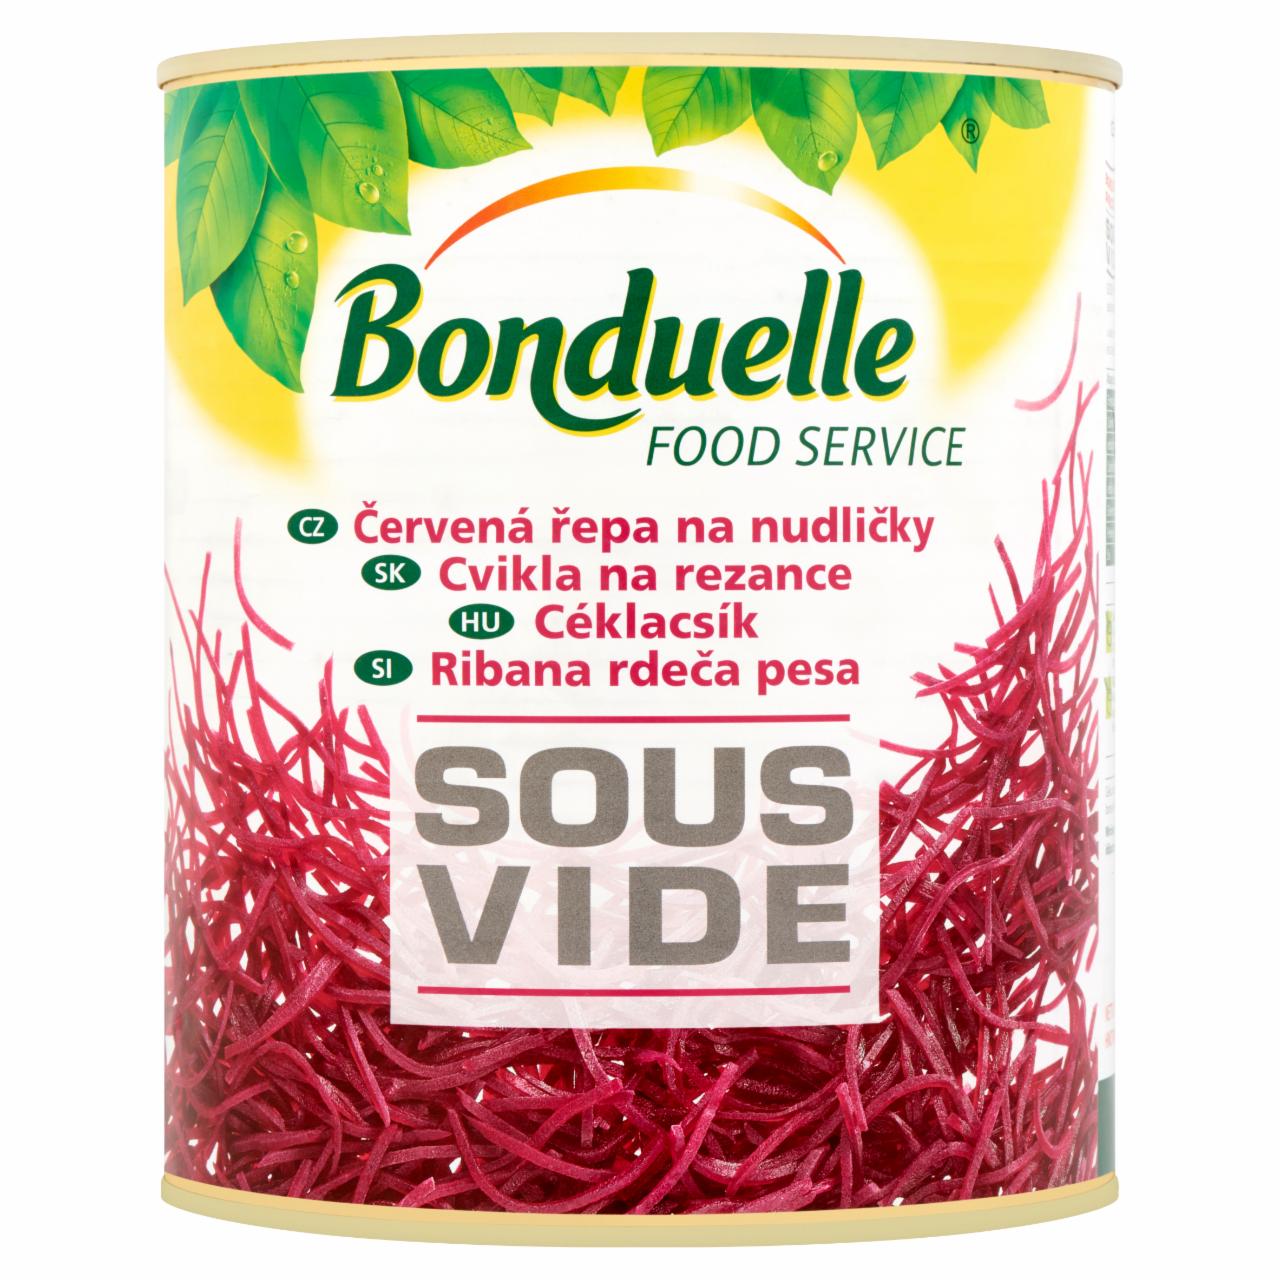 Képek - Bonduelle Food Service Sous Vide céklacsík 2185 g